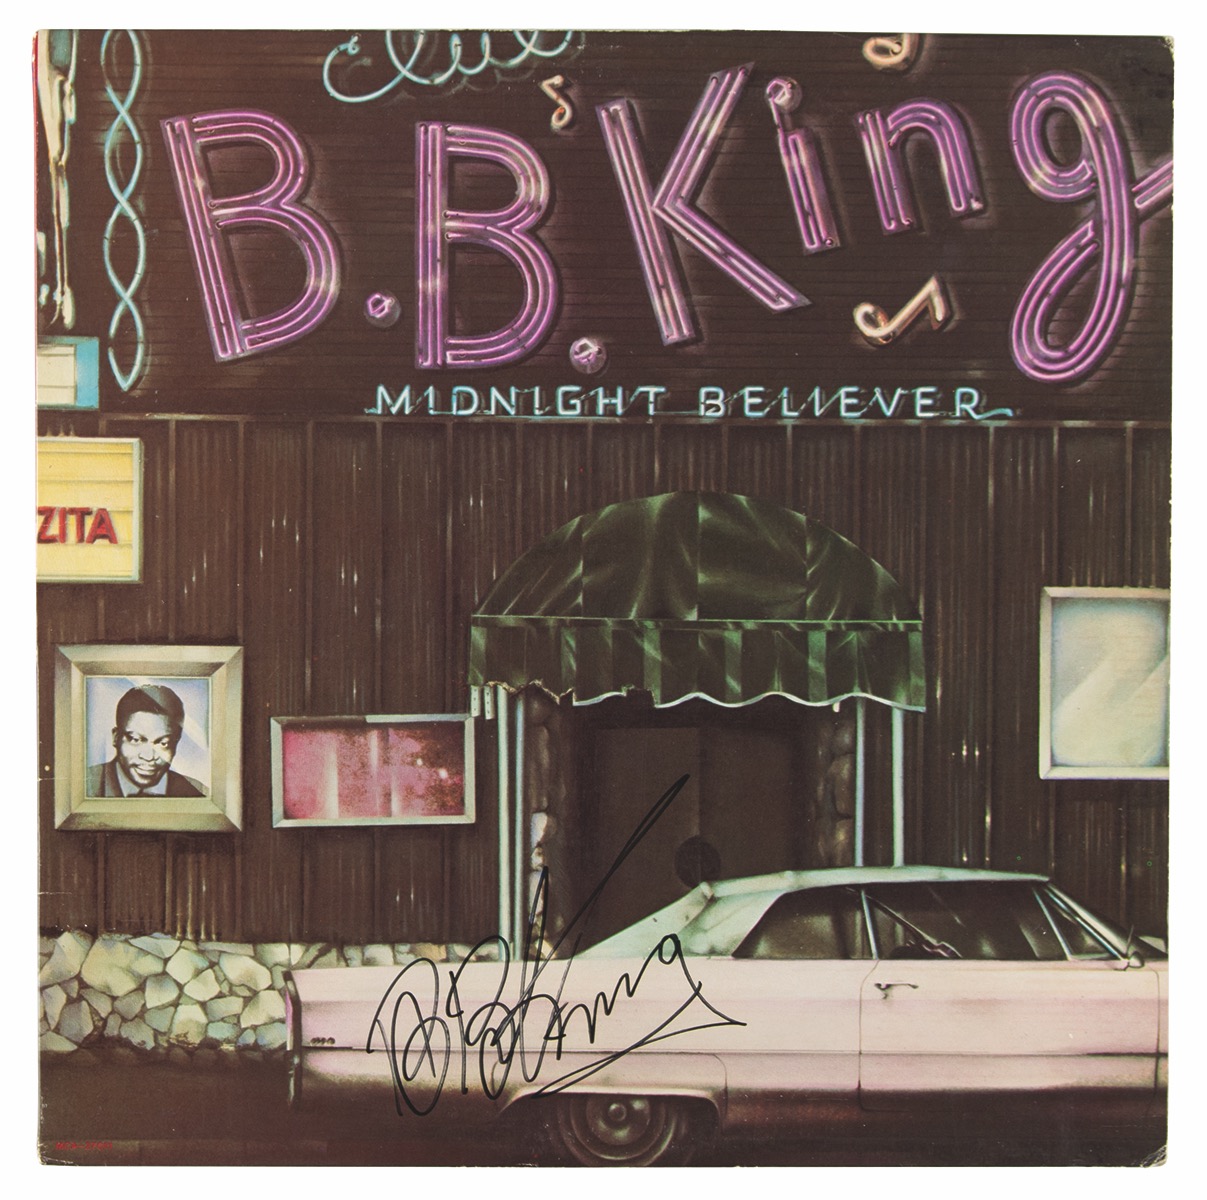 Lot #454 B. B. King Signed Album